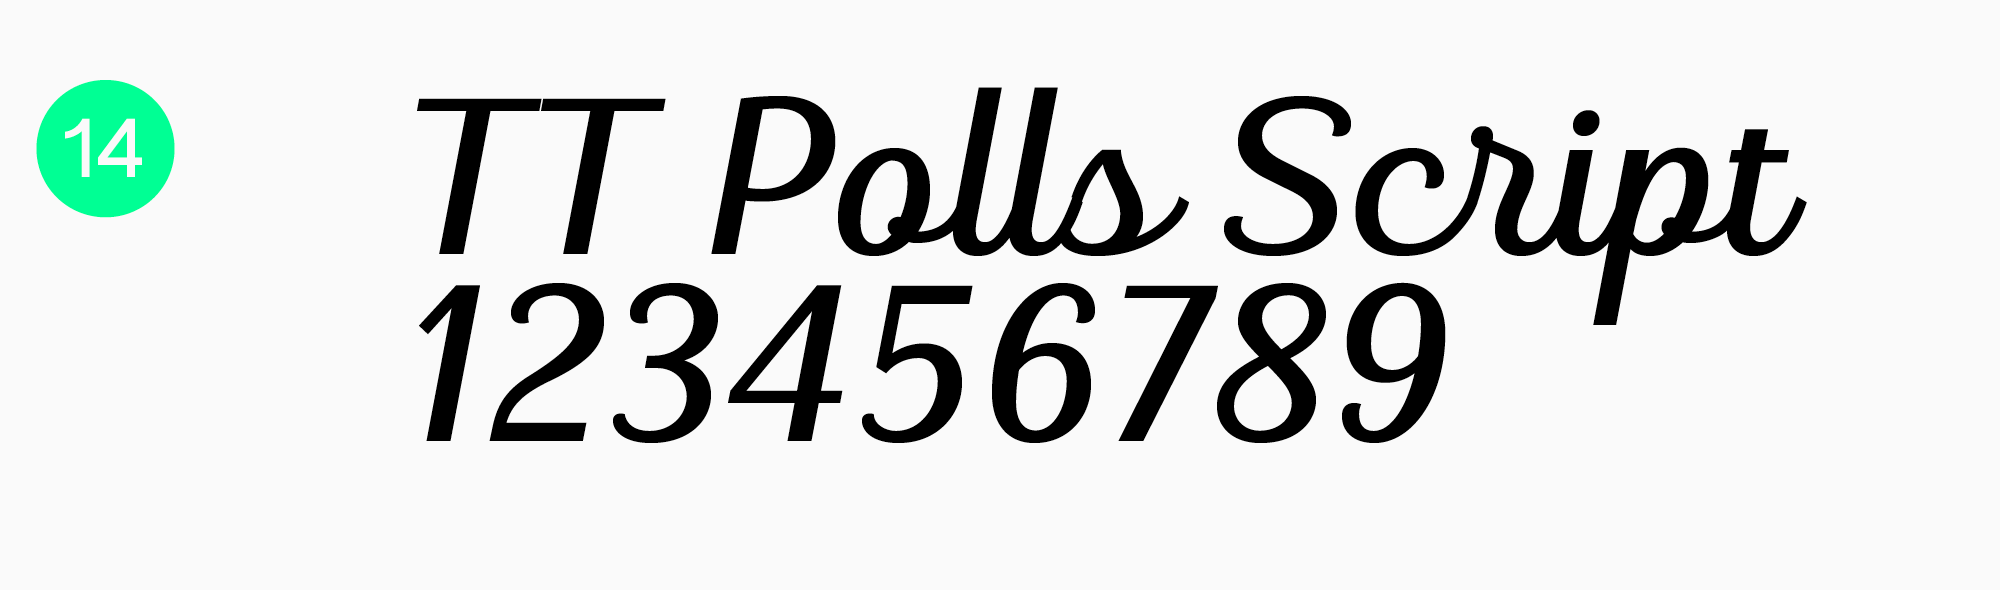 Best script fonts for logos TT Polls Script